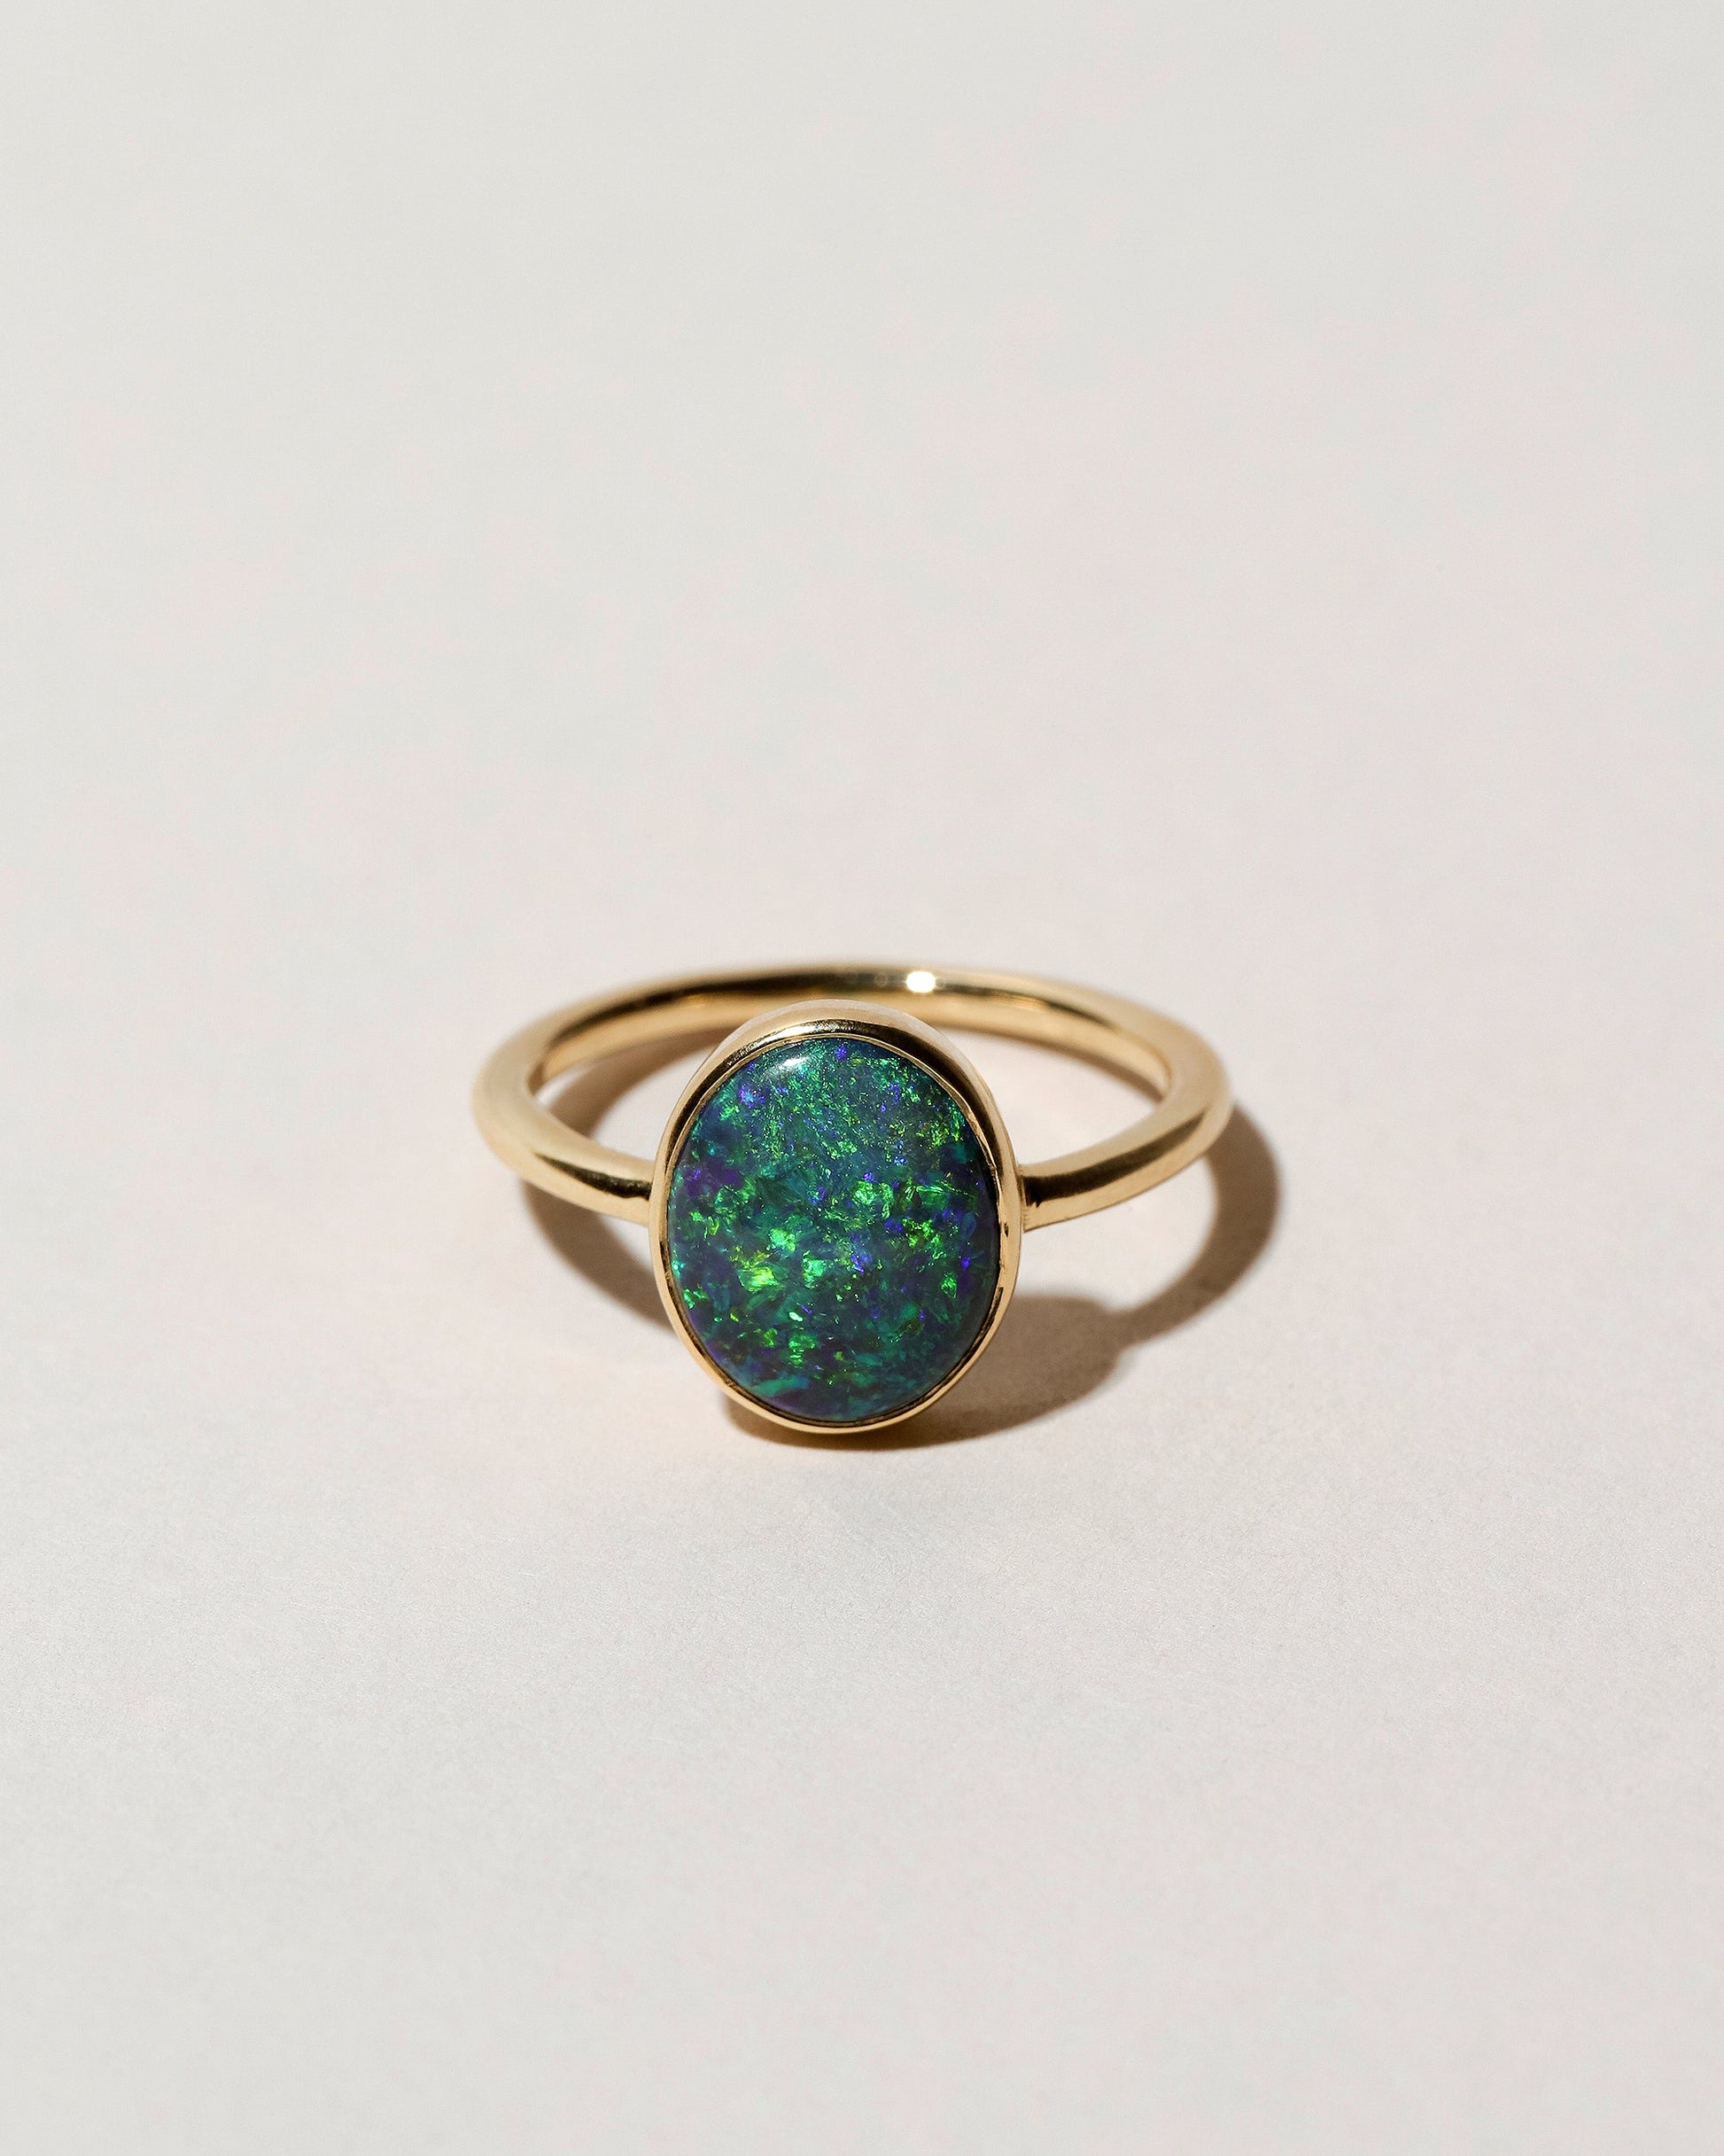  Australian Black Opal Ring on light color background.